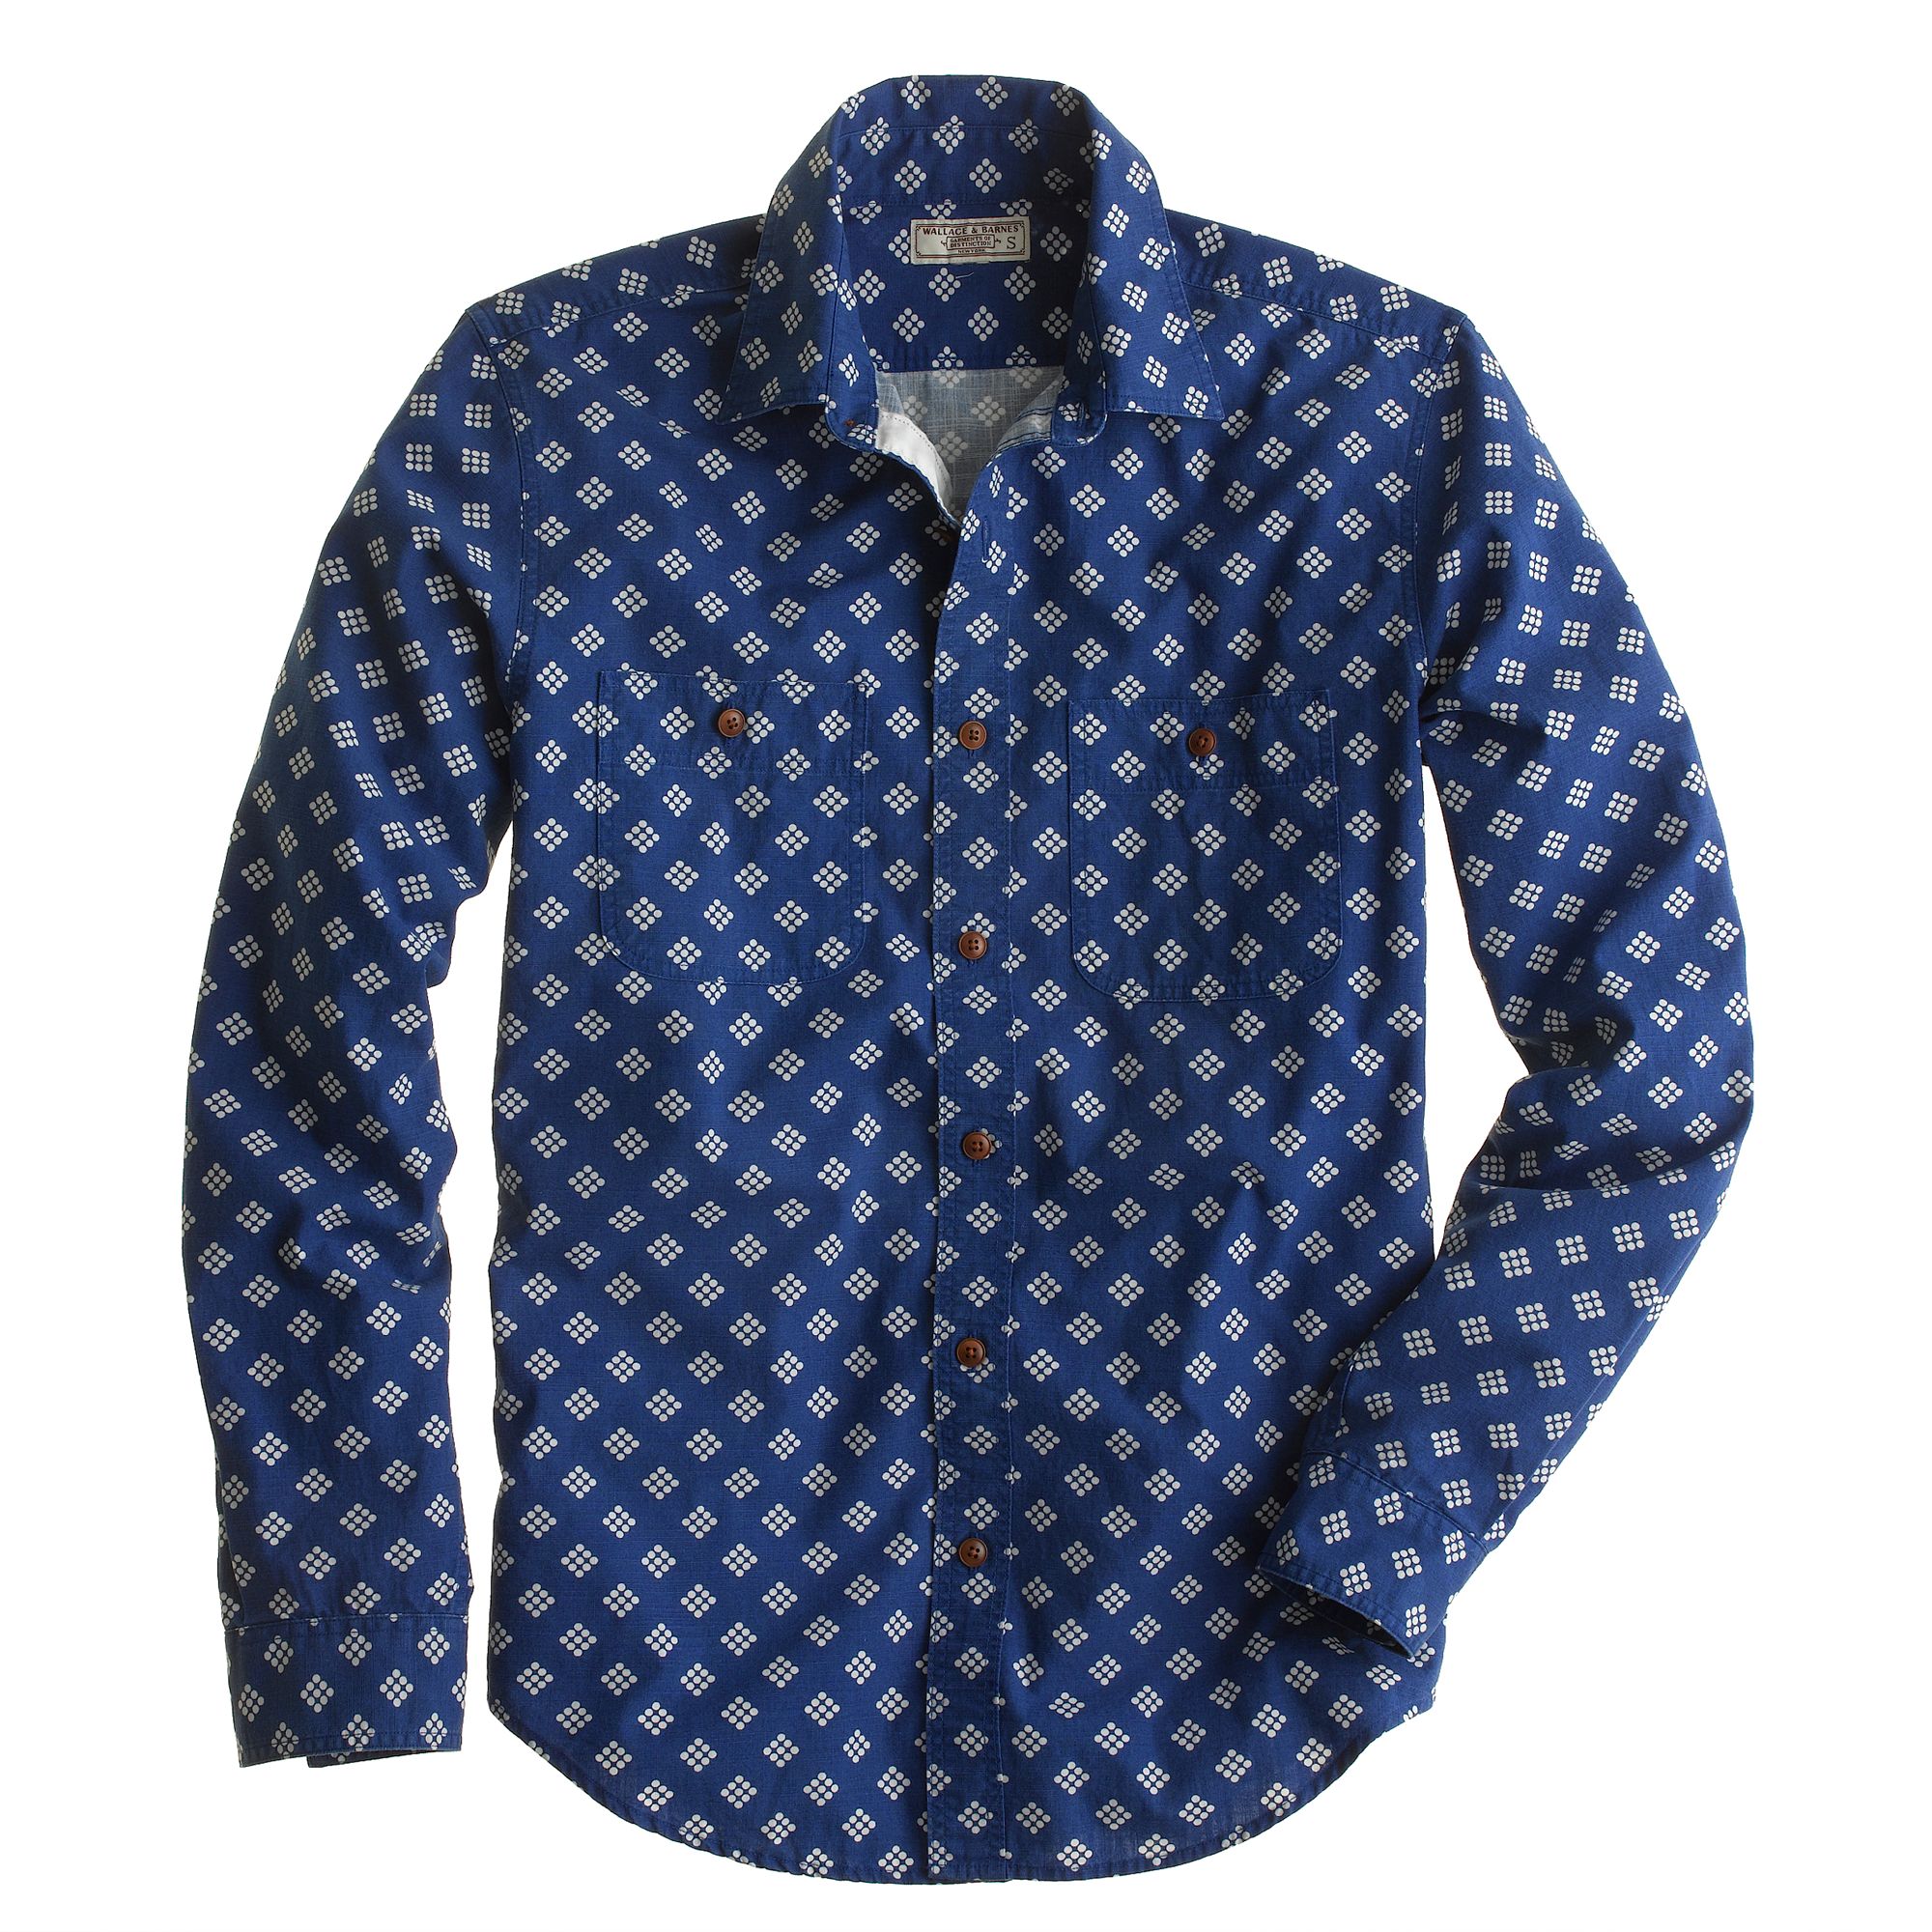 J.Crew Wallace Barnes Dot Diamond Bandana Shirt in Blue for Men - Lyst